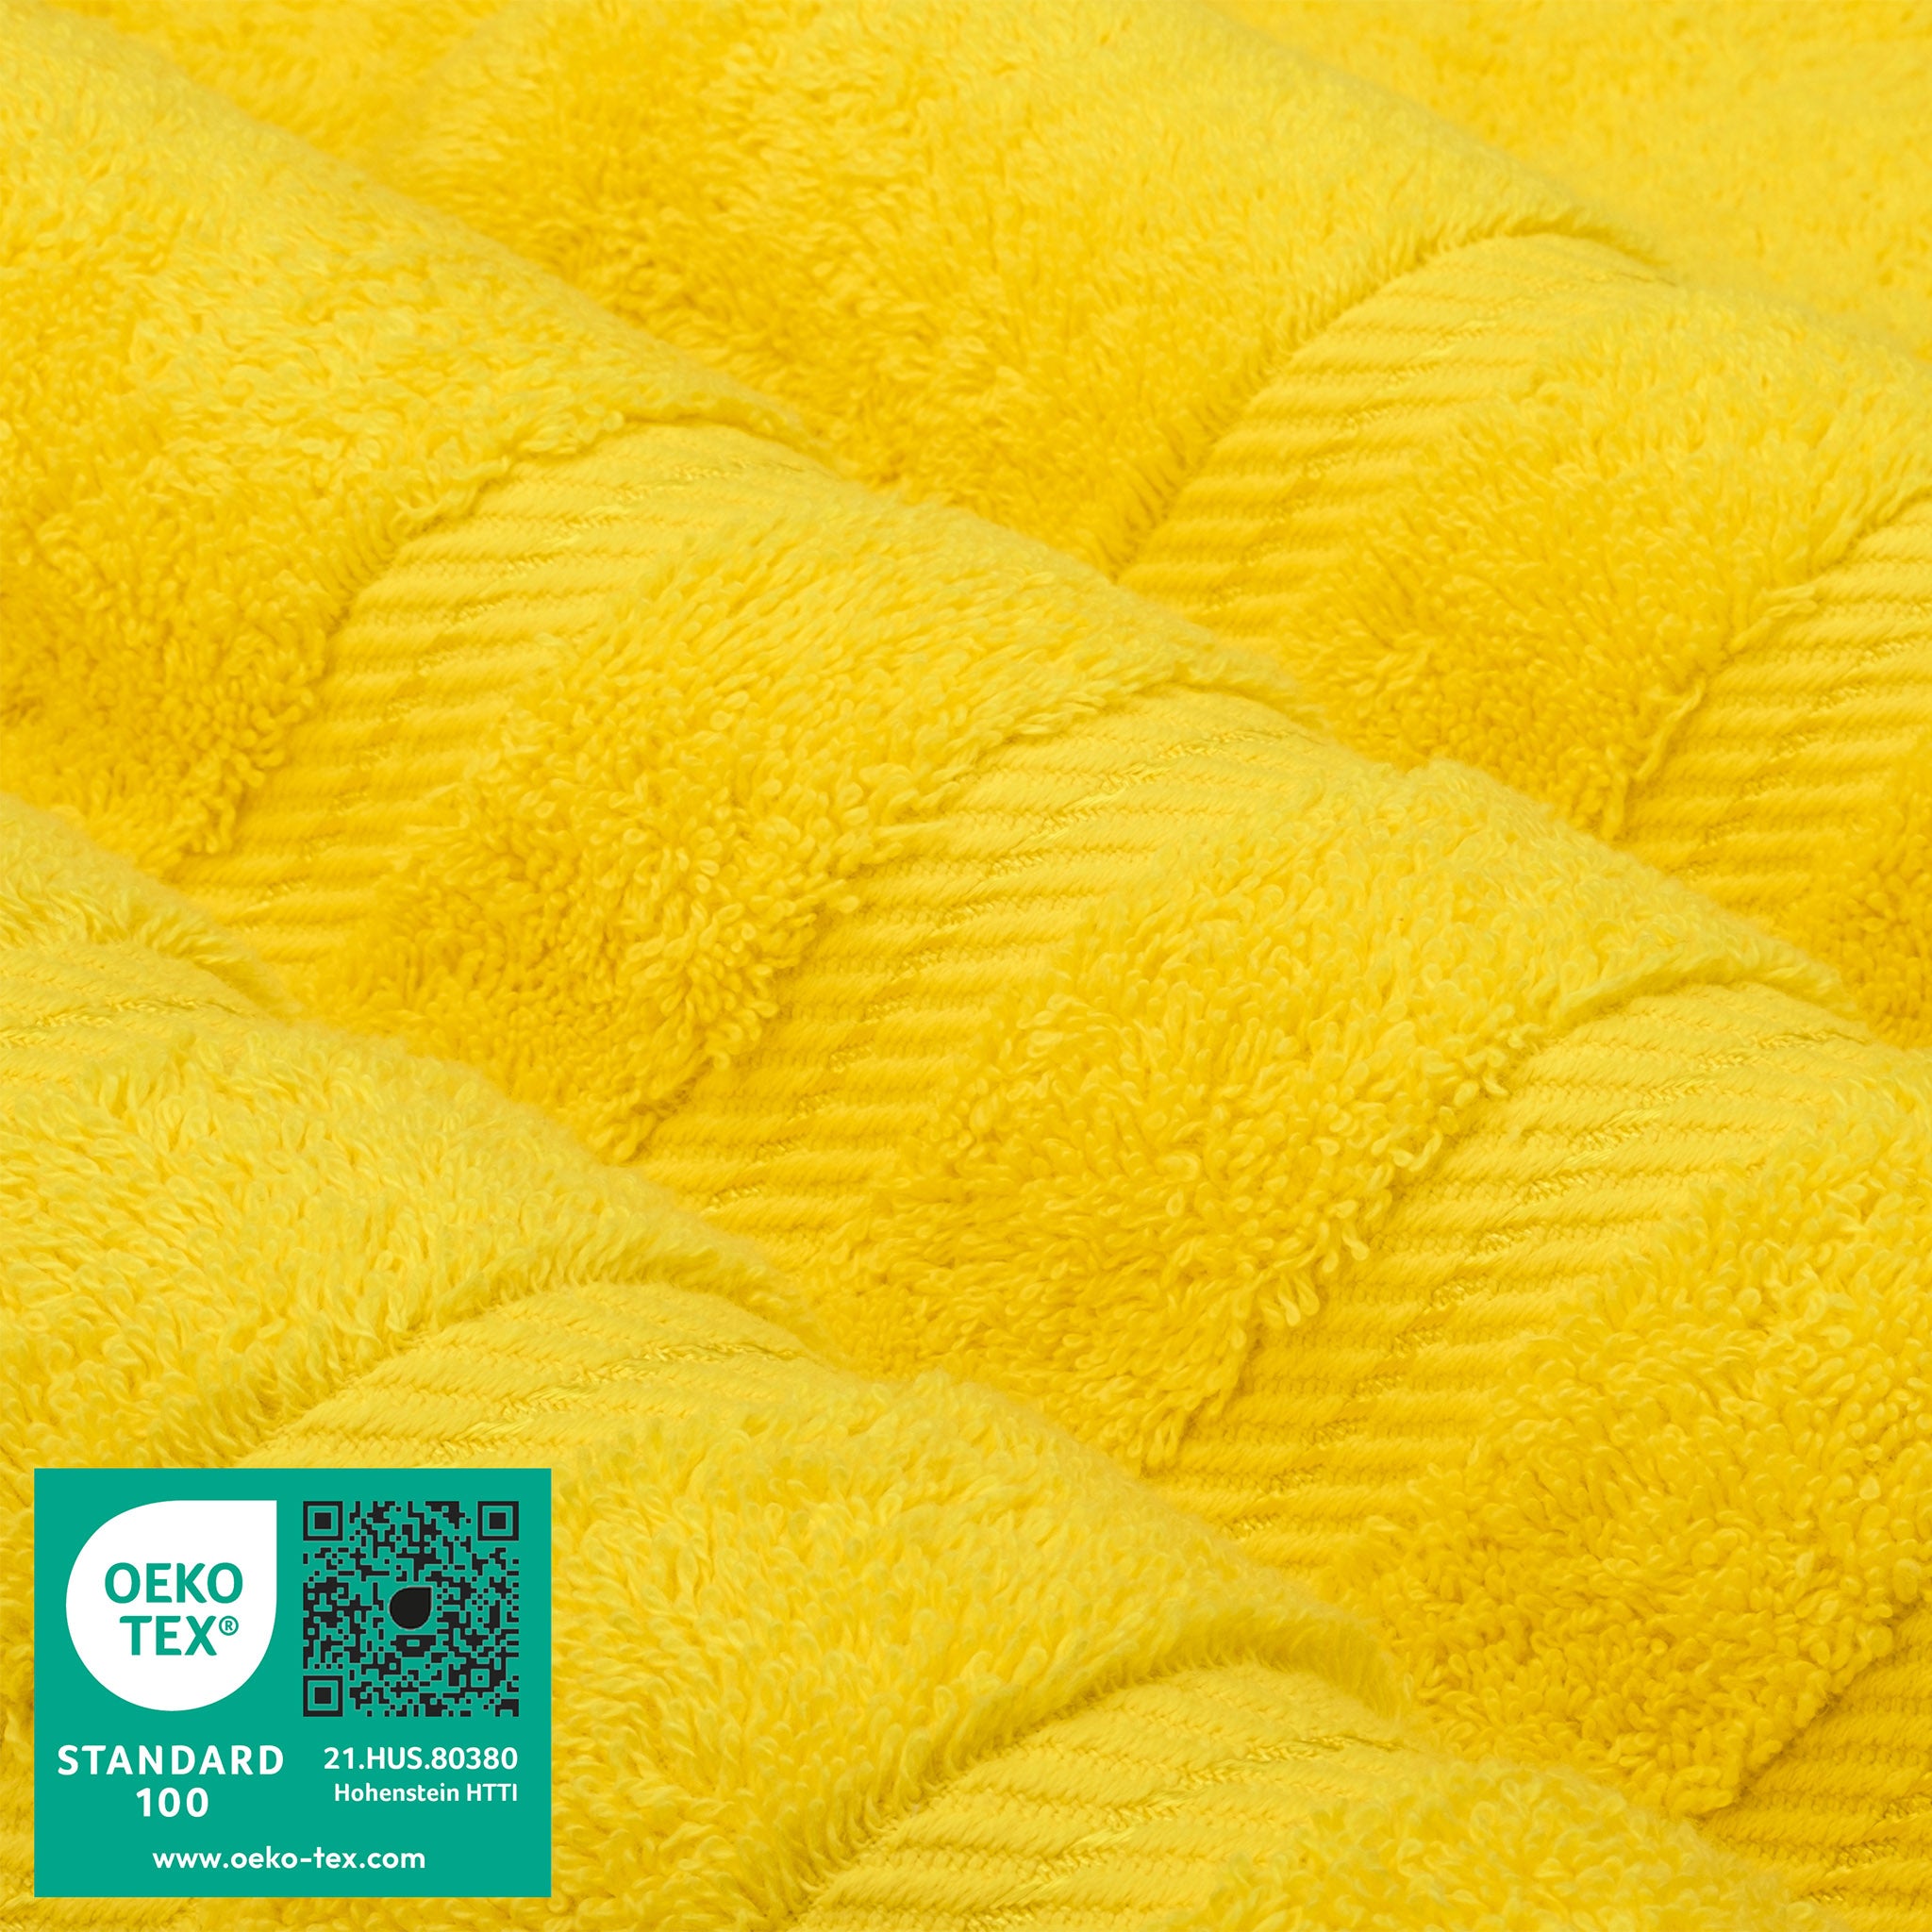  American Soft Linen 100% Turkish Cotton 4 Pack Hand Towel Set  yellow-3